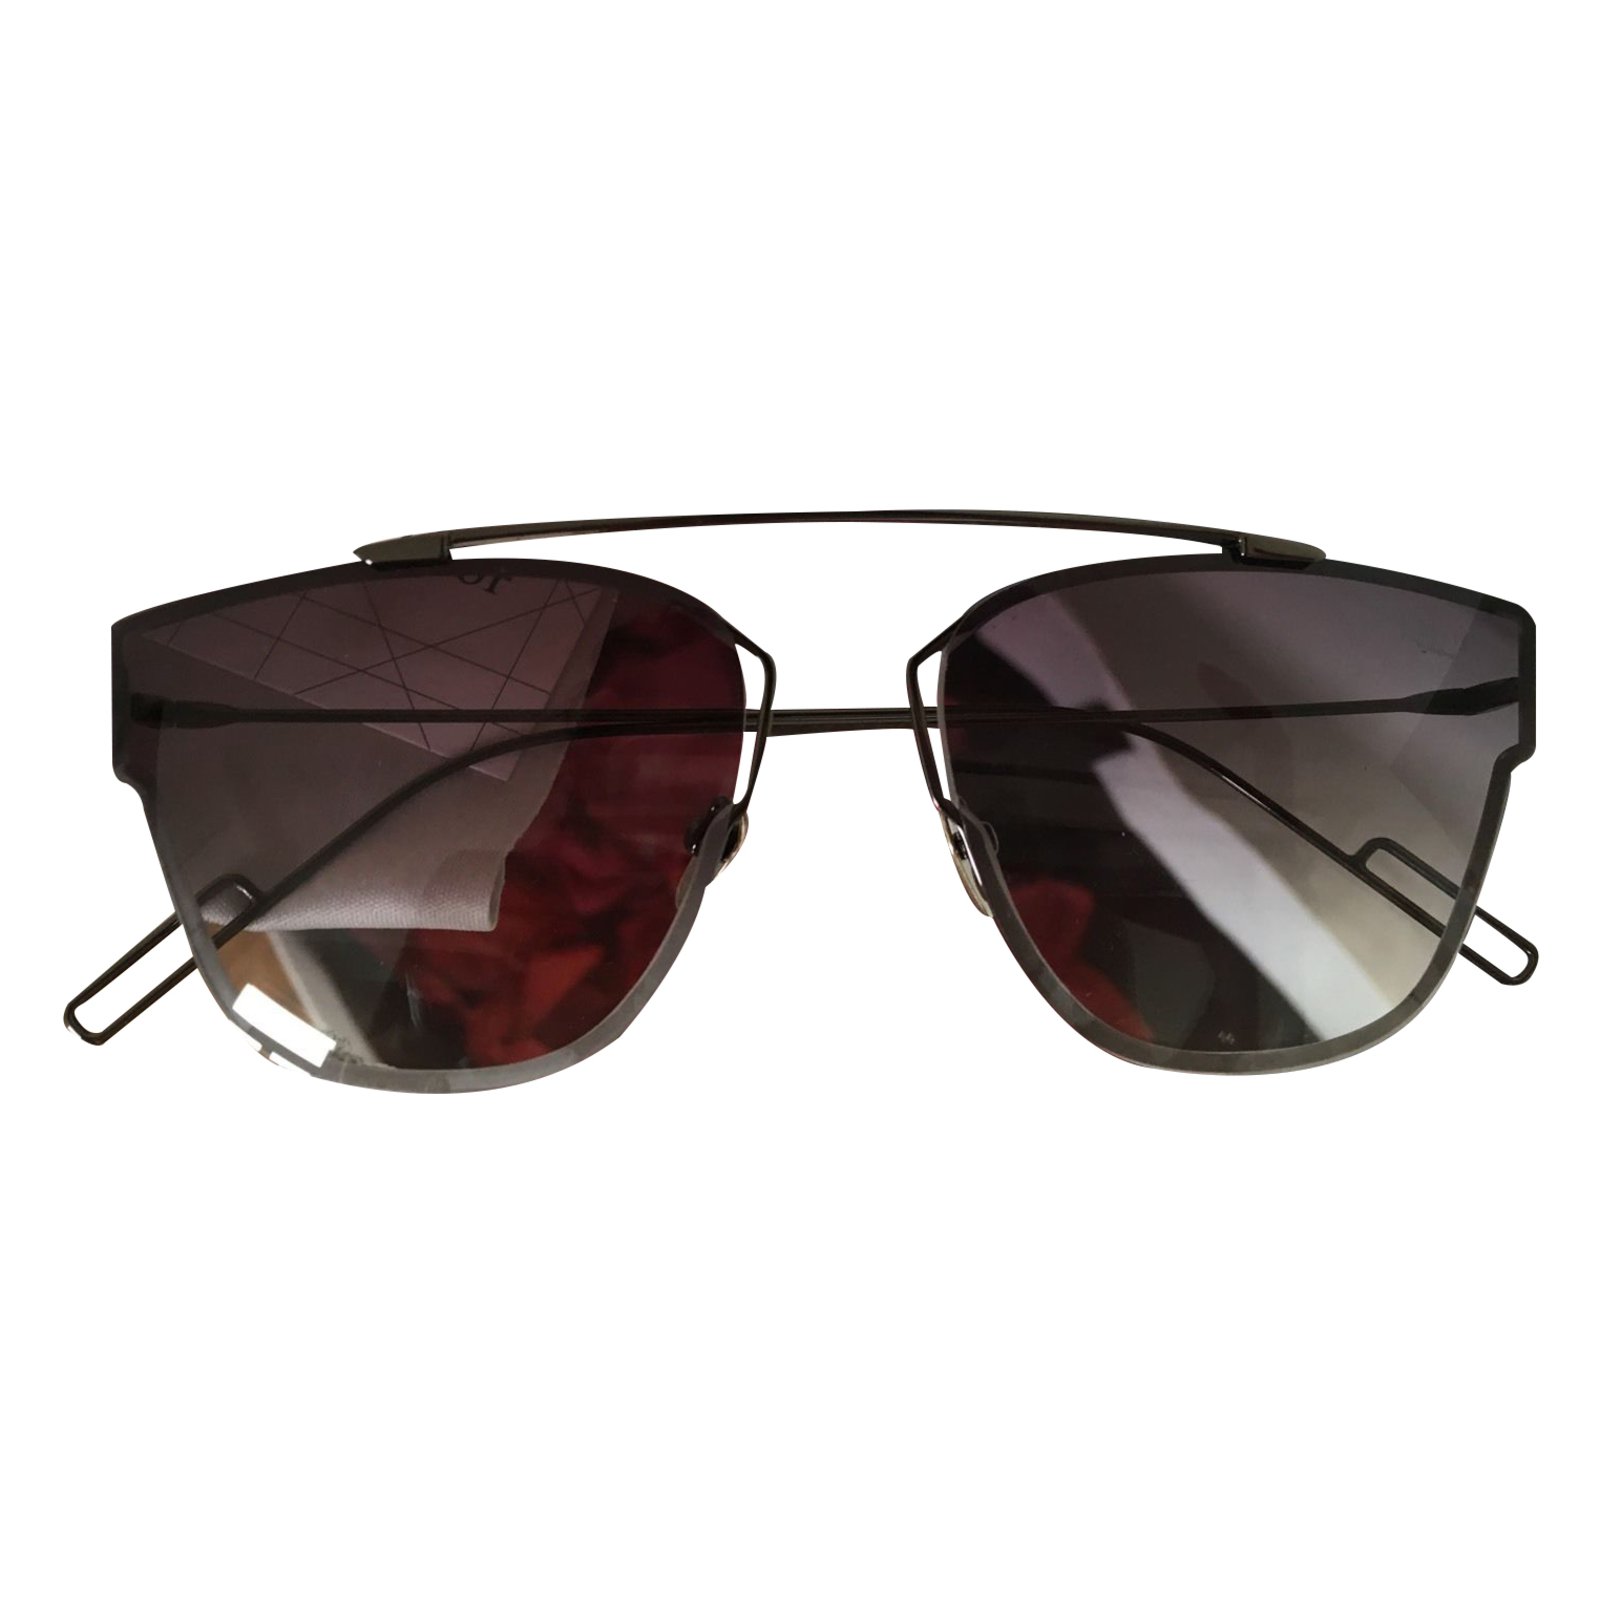 dior sunglasses 2016